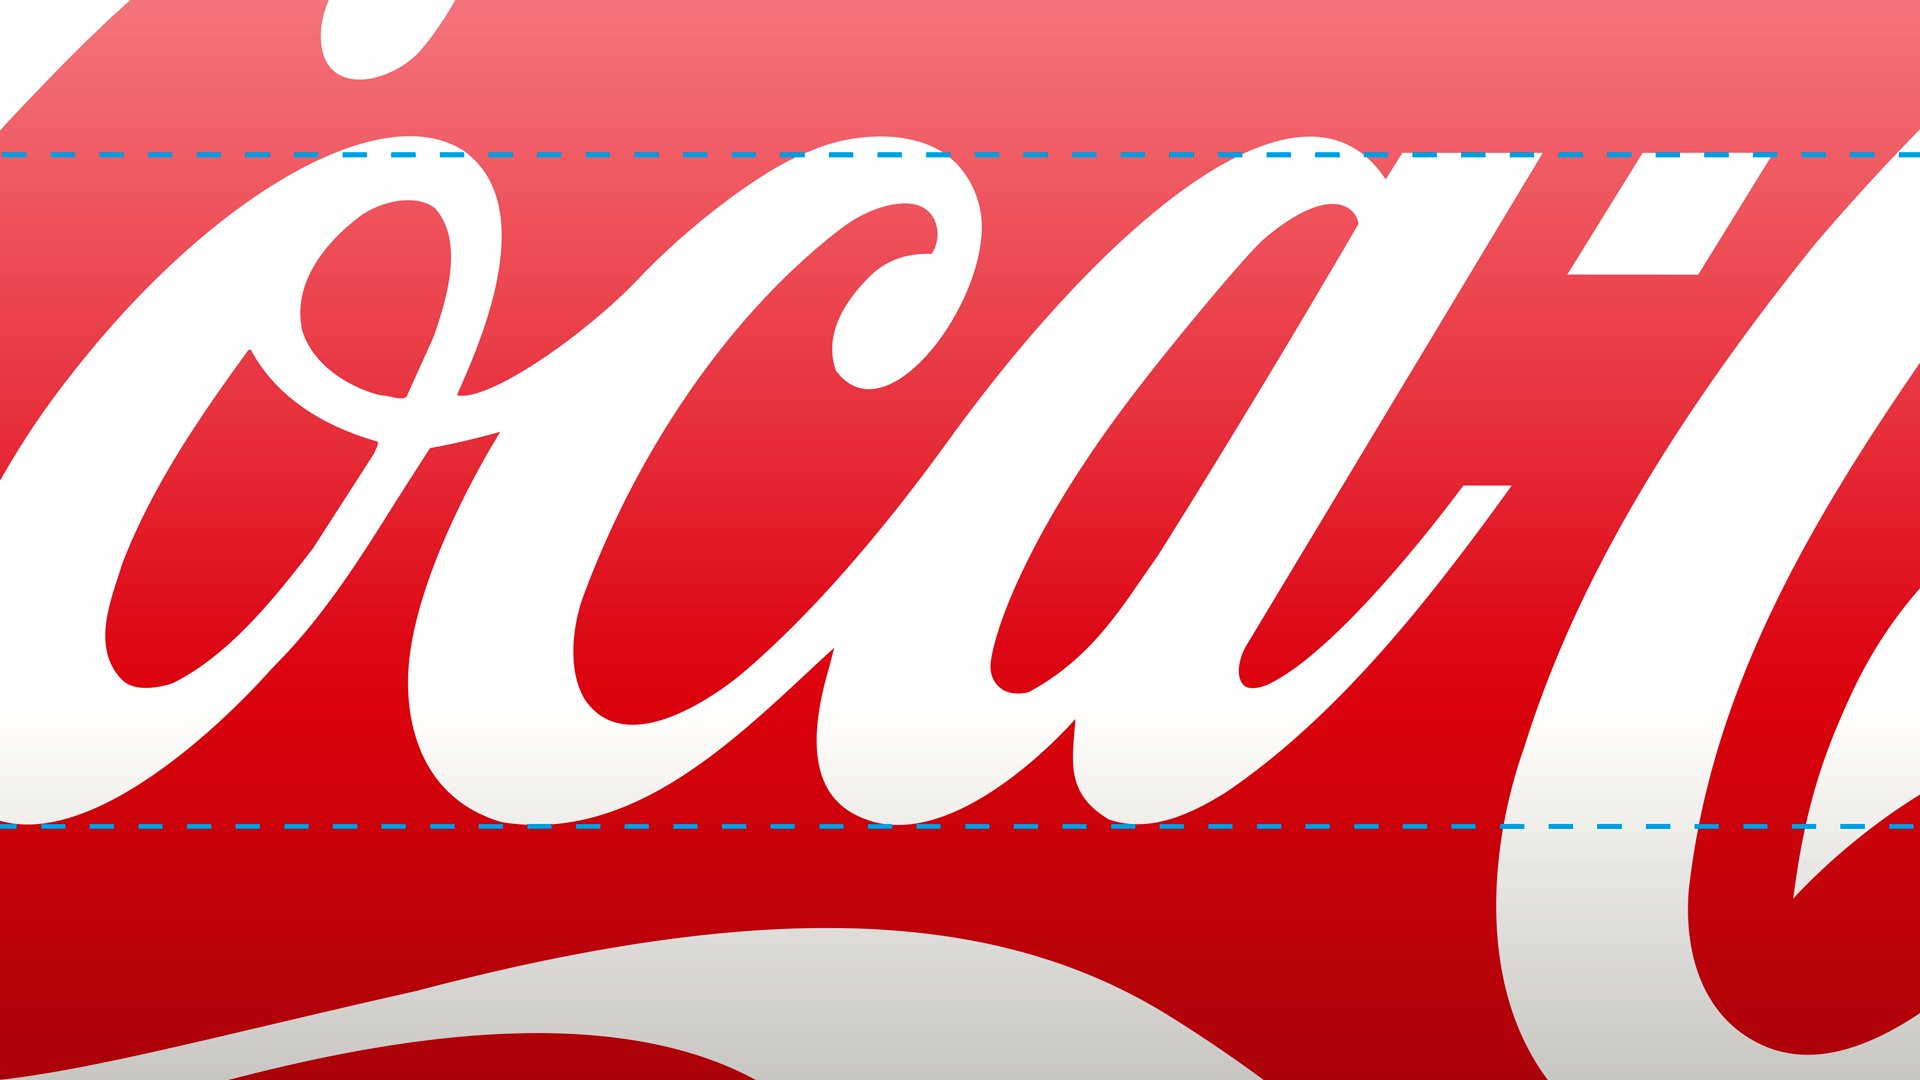 Coca-cola typography detail by LOOP Associates